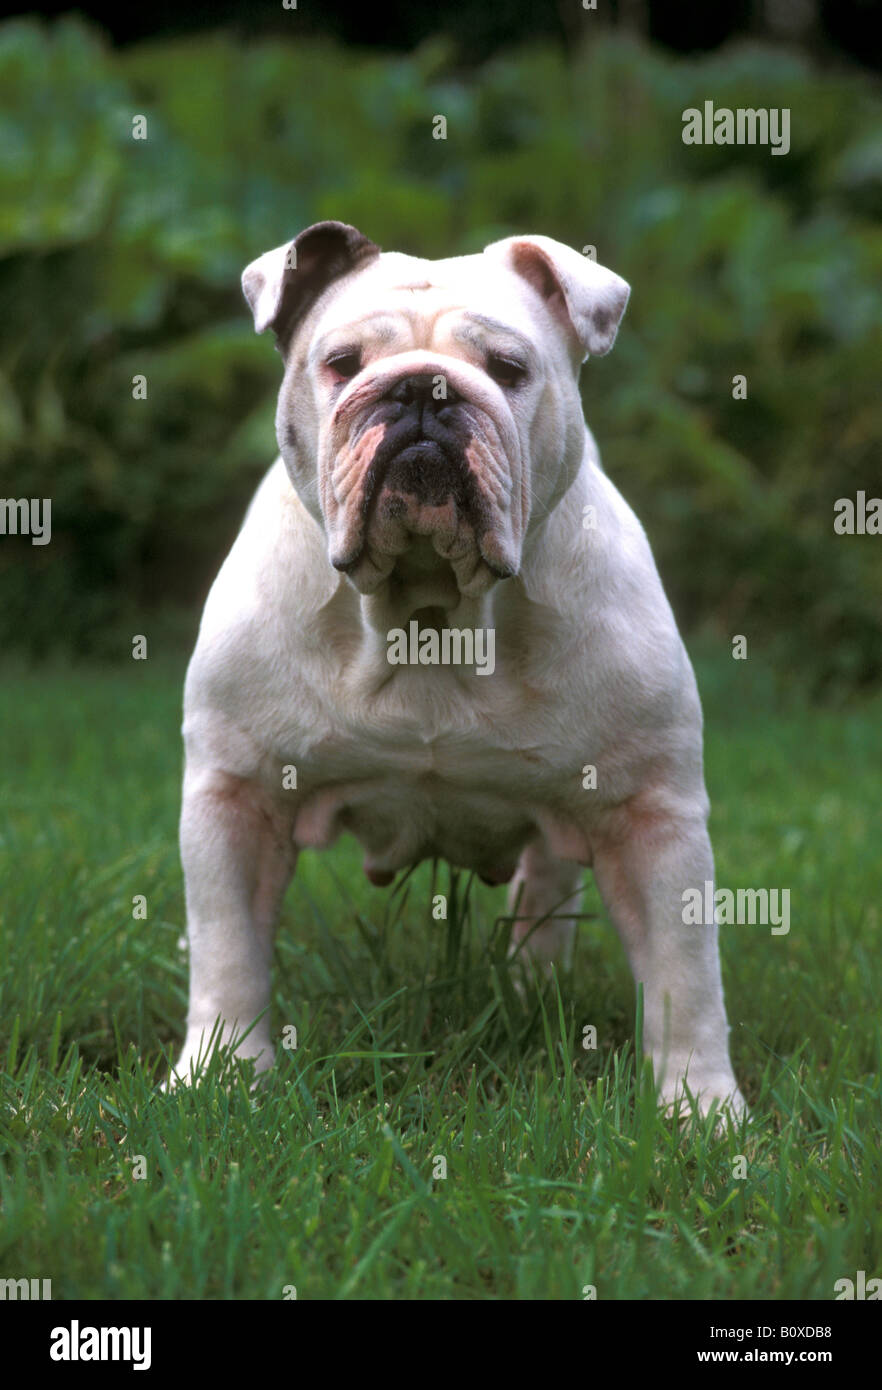 English Bulldog (Canis lupus familiaris) Adult dog standing on grass Stock Photo